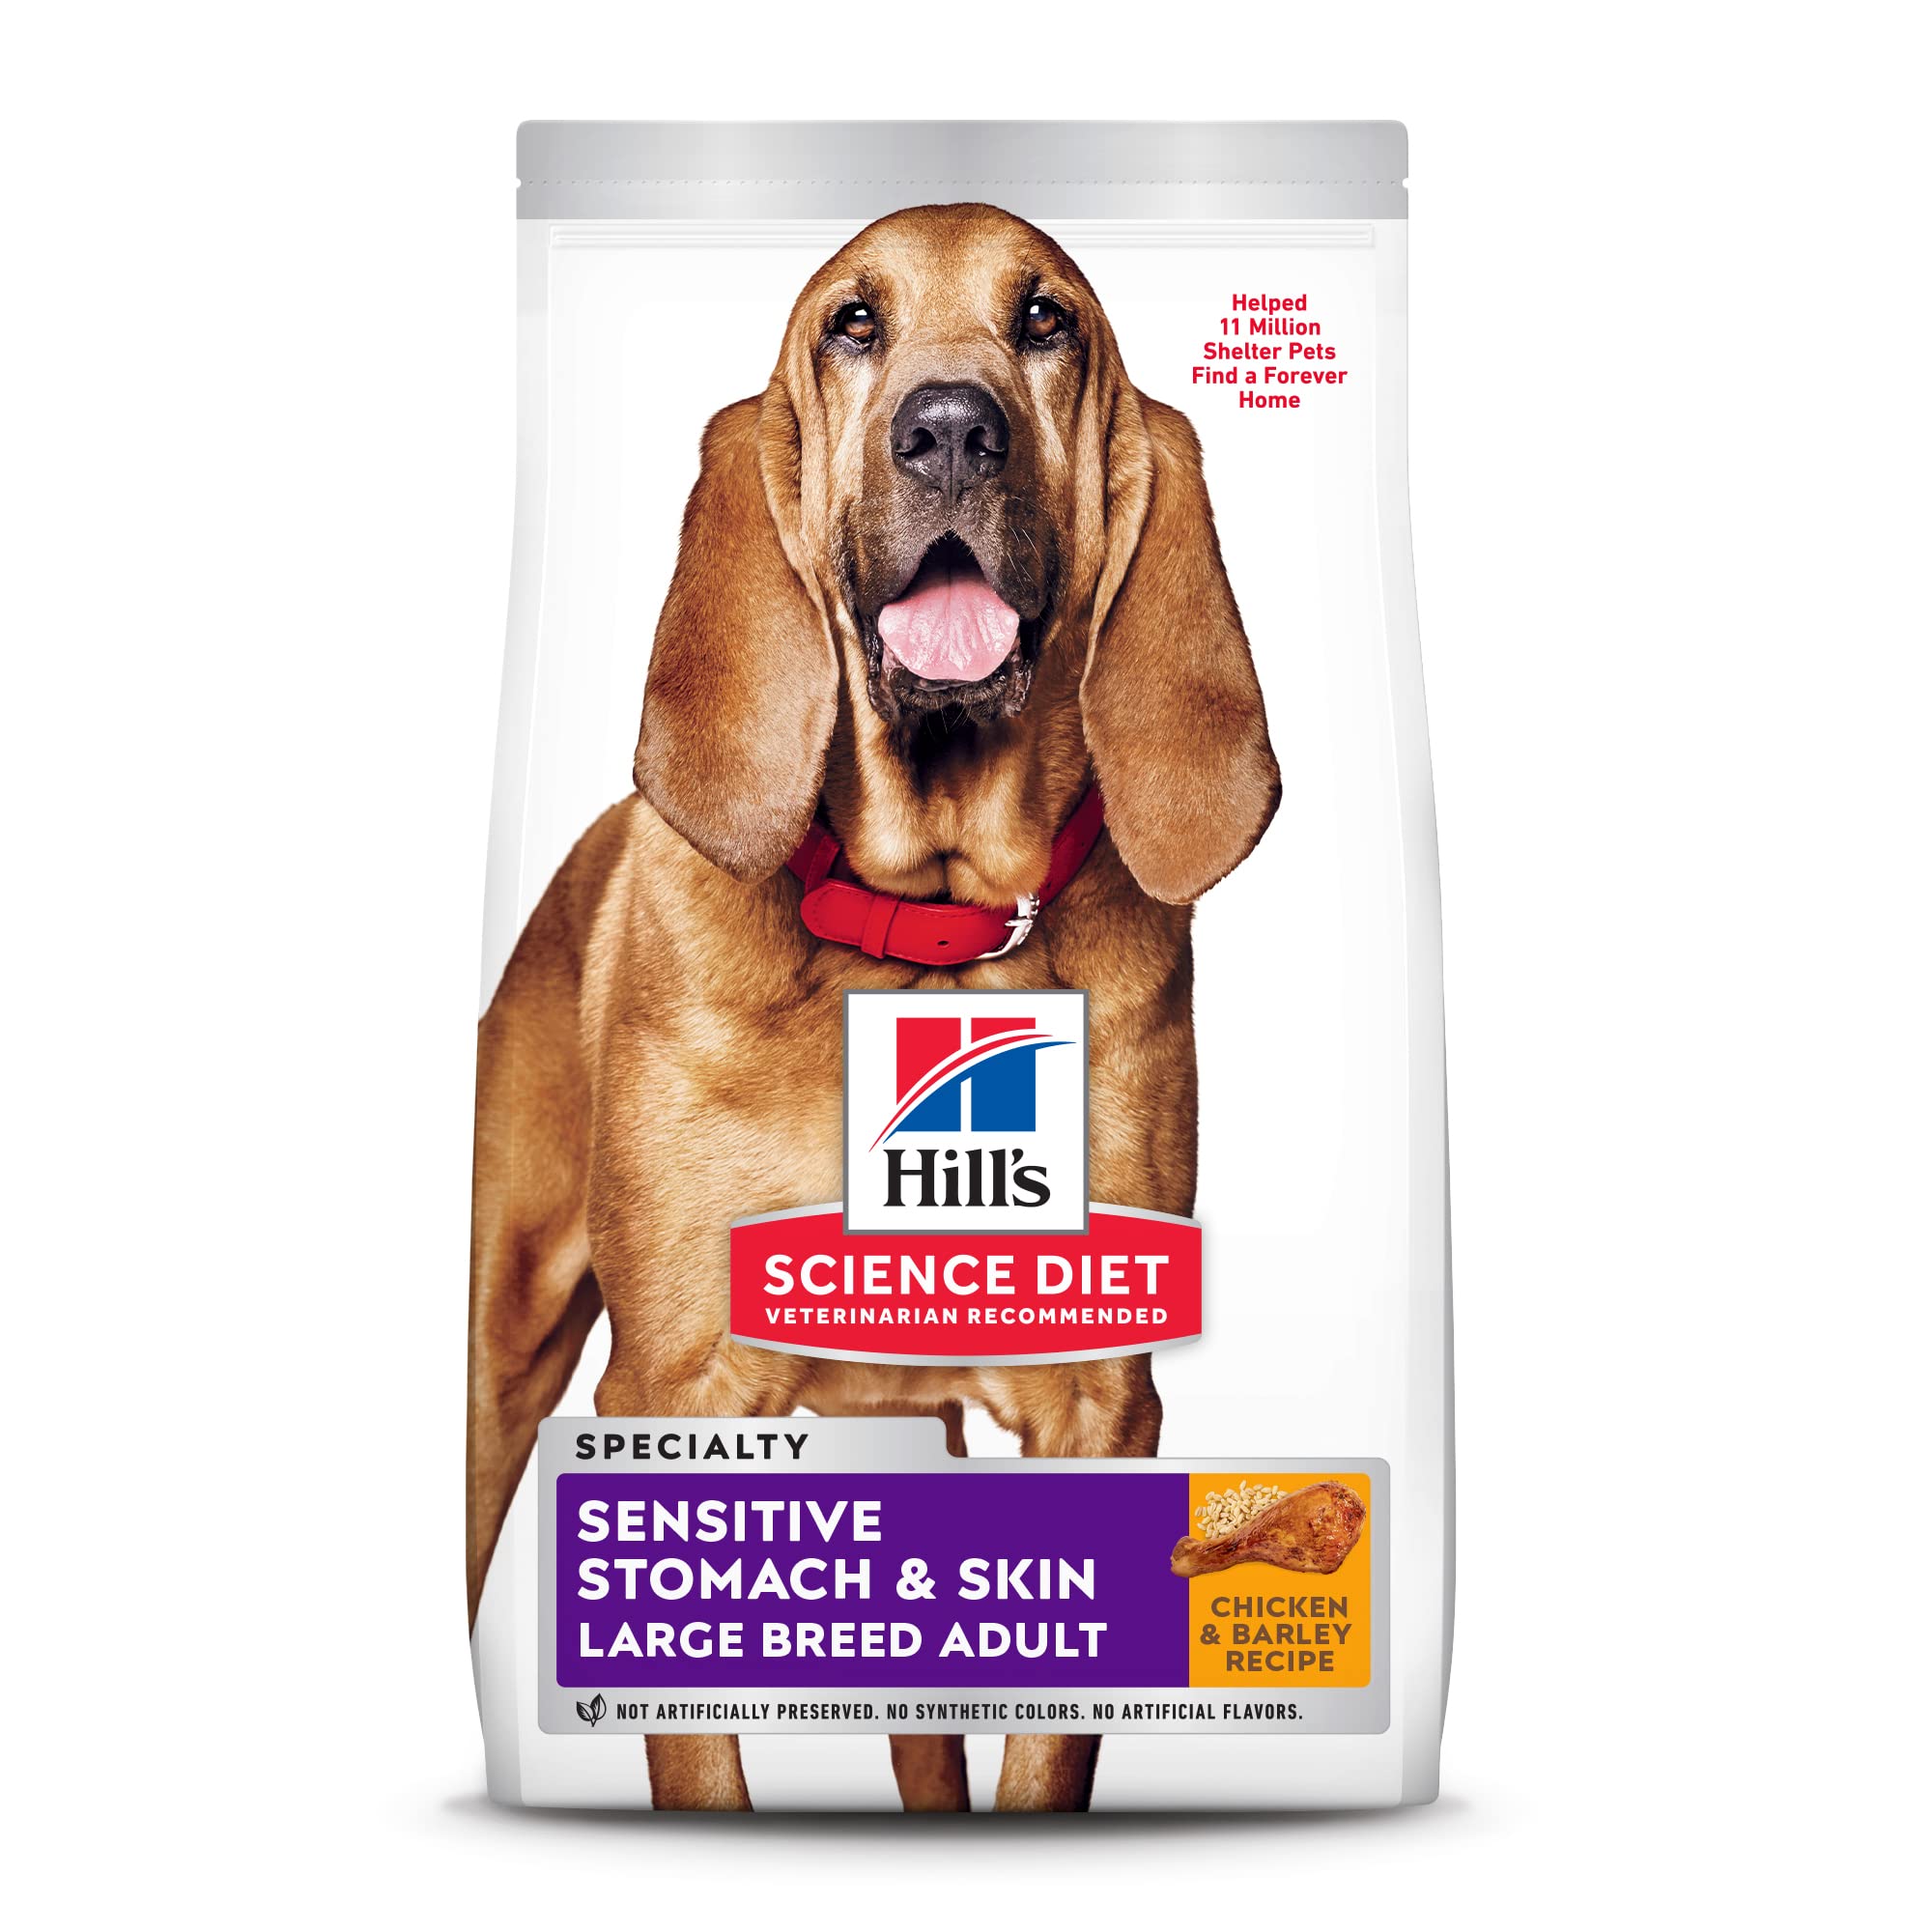 Hill's Science Diet 成人敏感肠胃和皮肤大型犬干狗粮，鸡肉配方，30 磅袋装